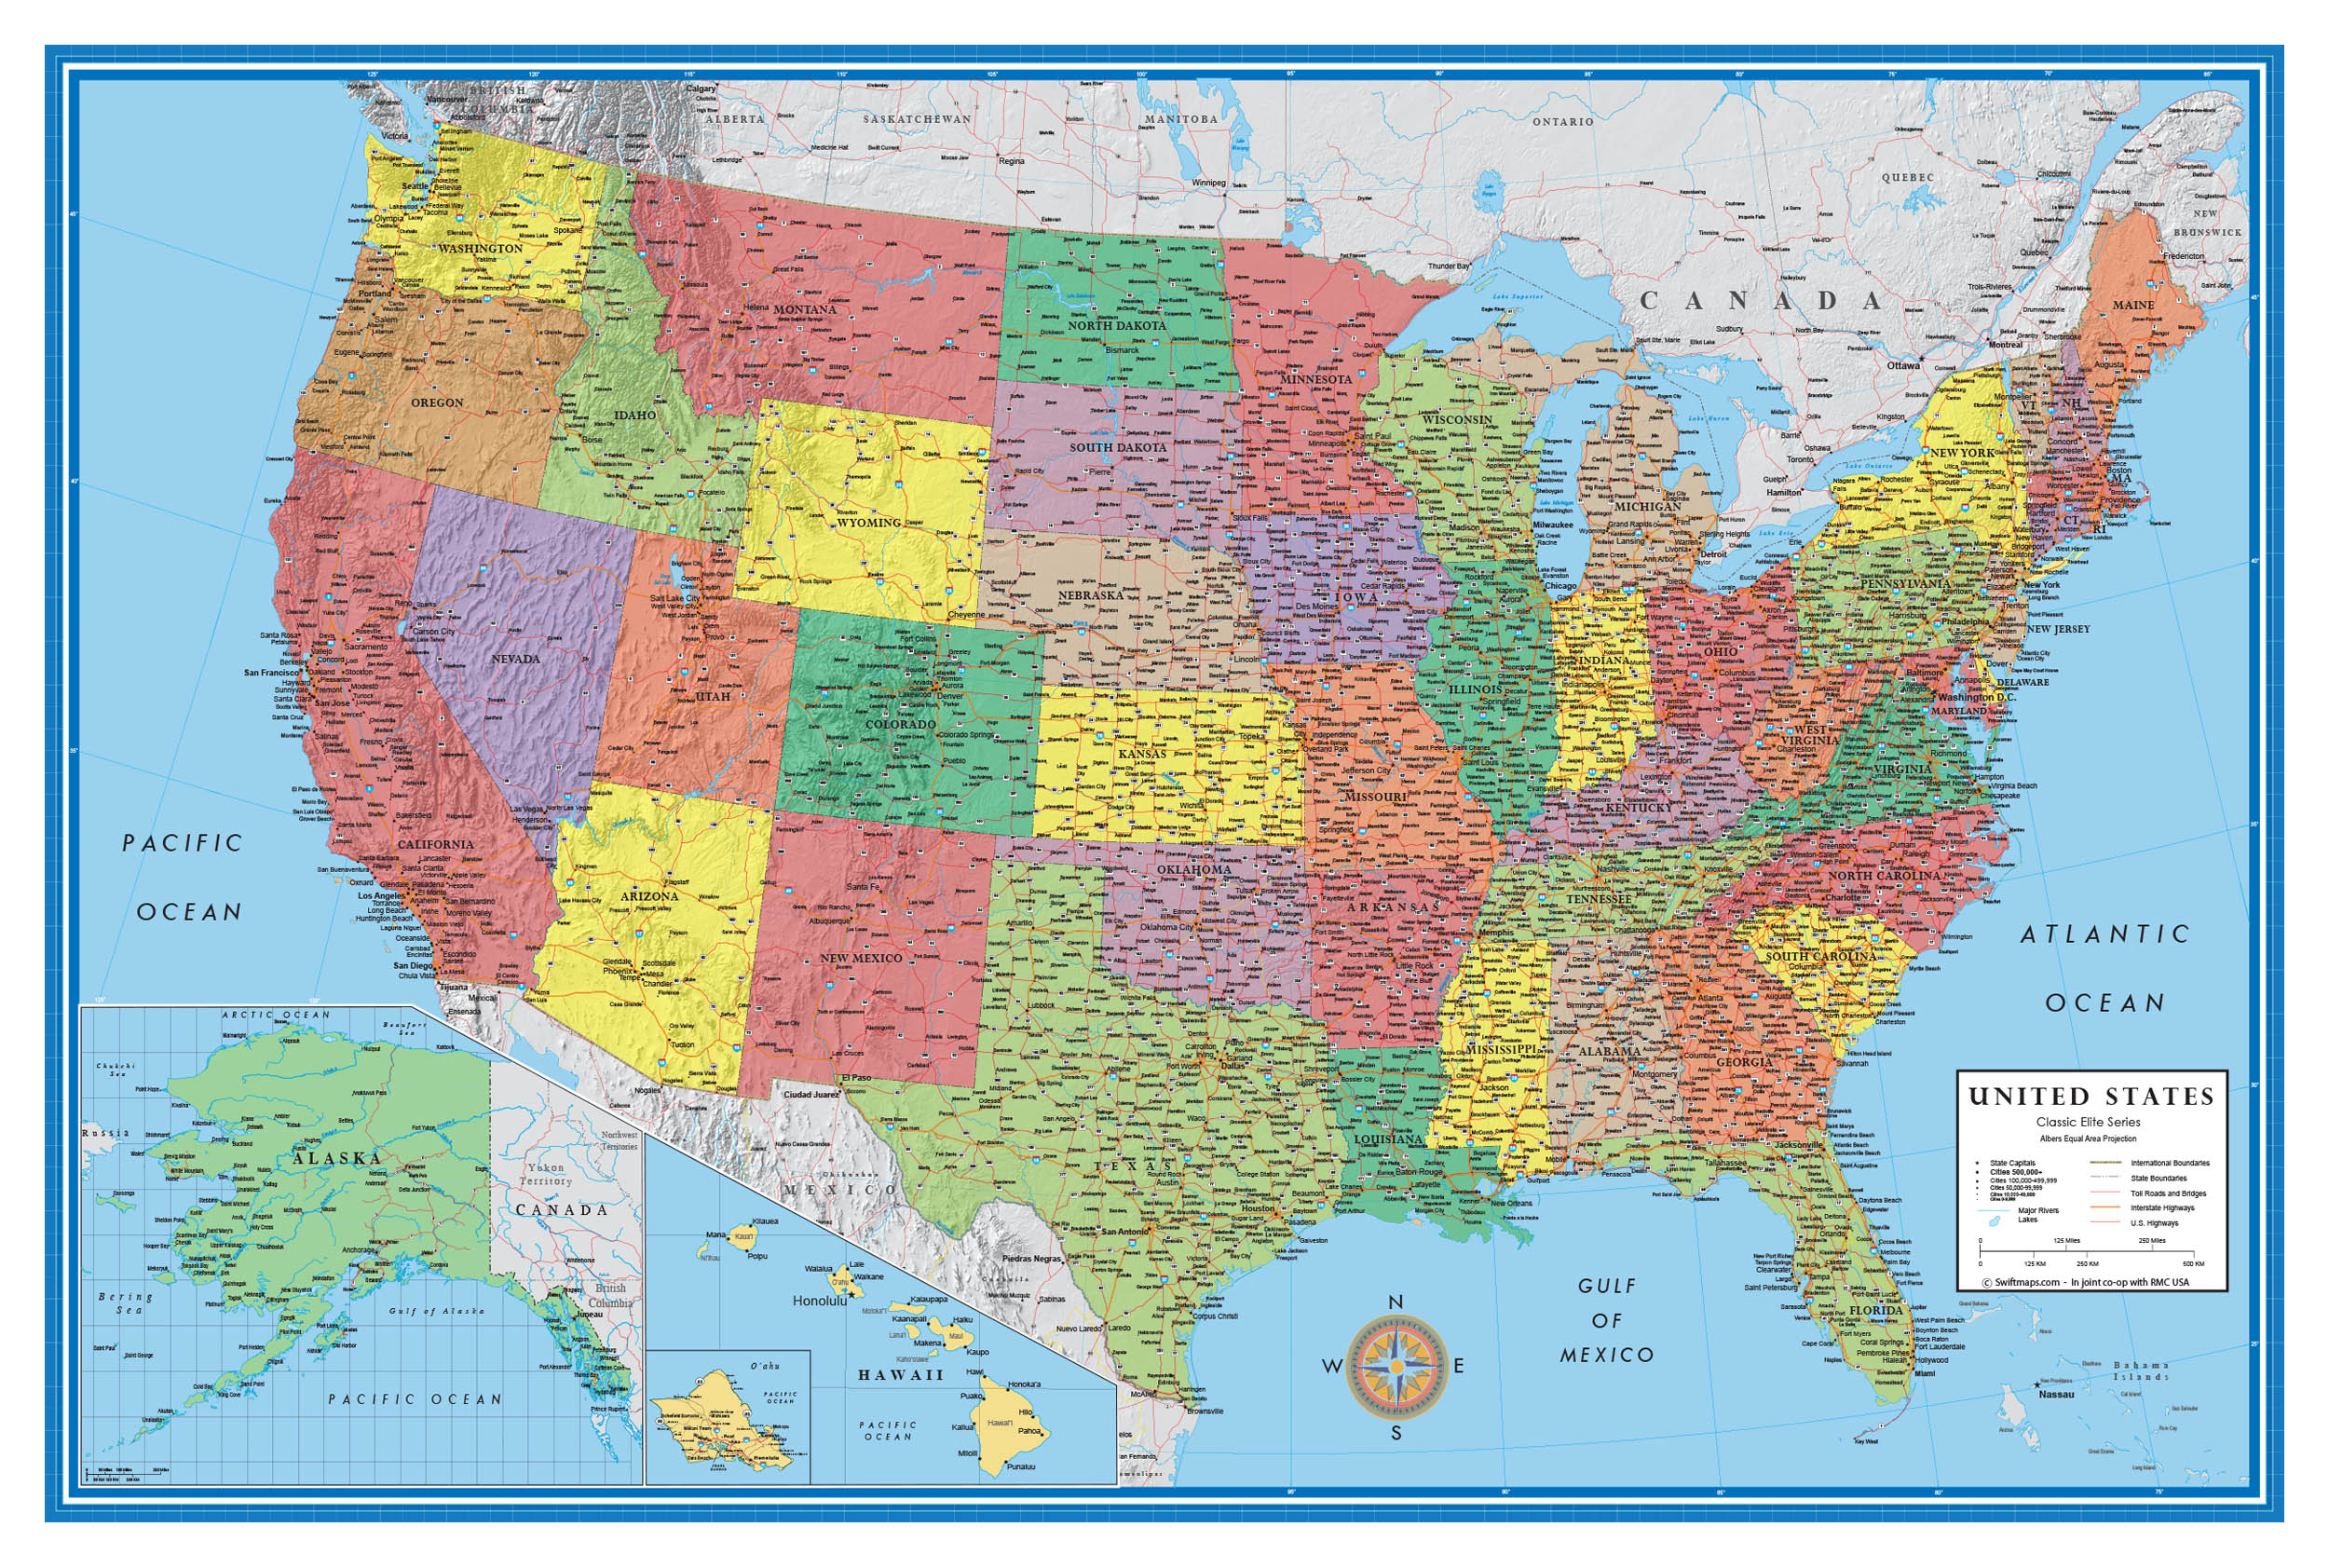 48x78 Huge United States, USA Classic Elite Wall Map Laminated - image 1 of 4